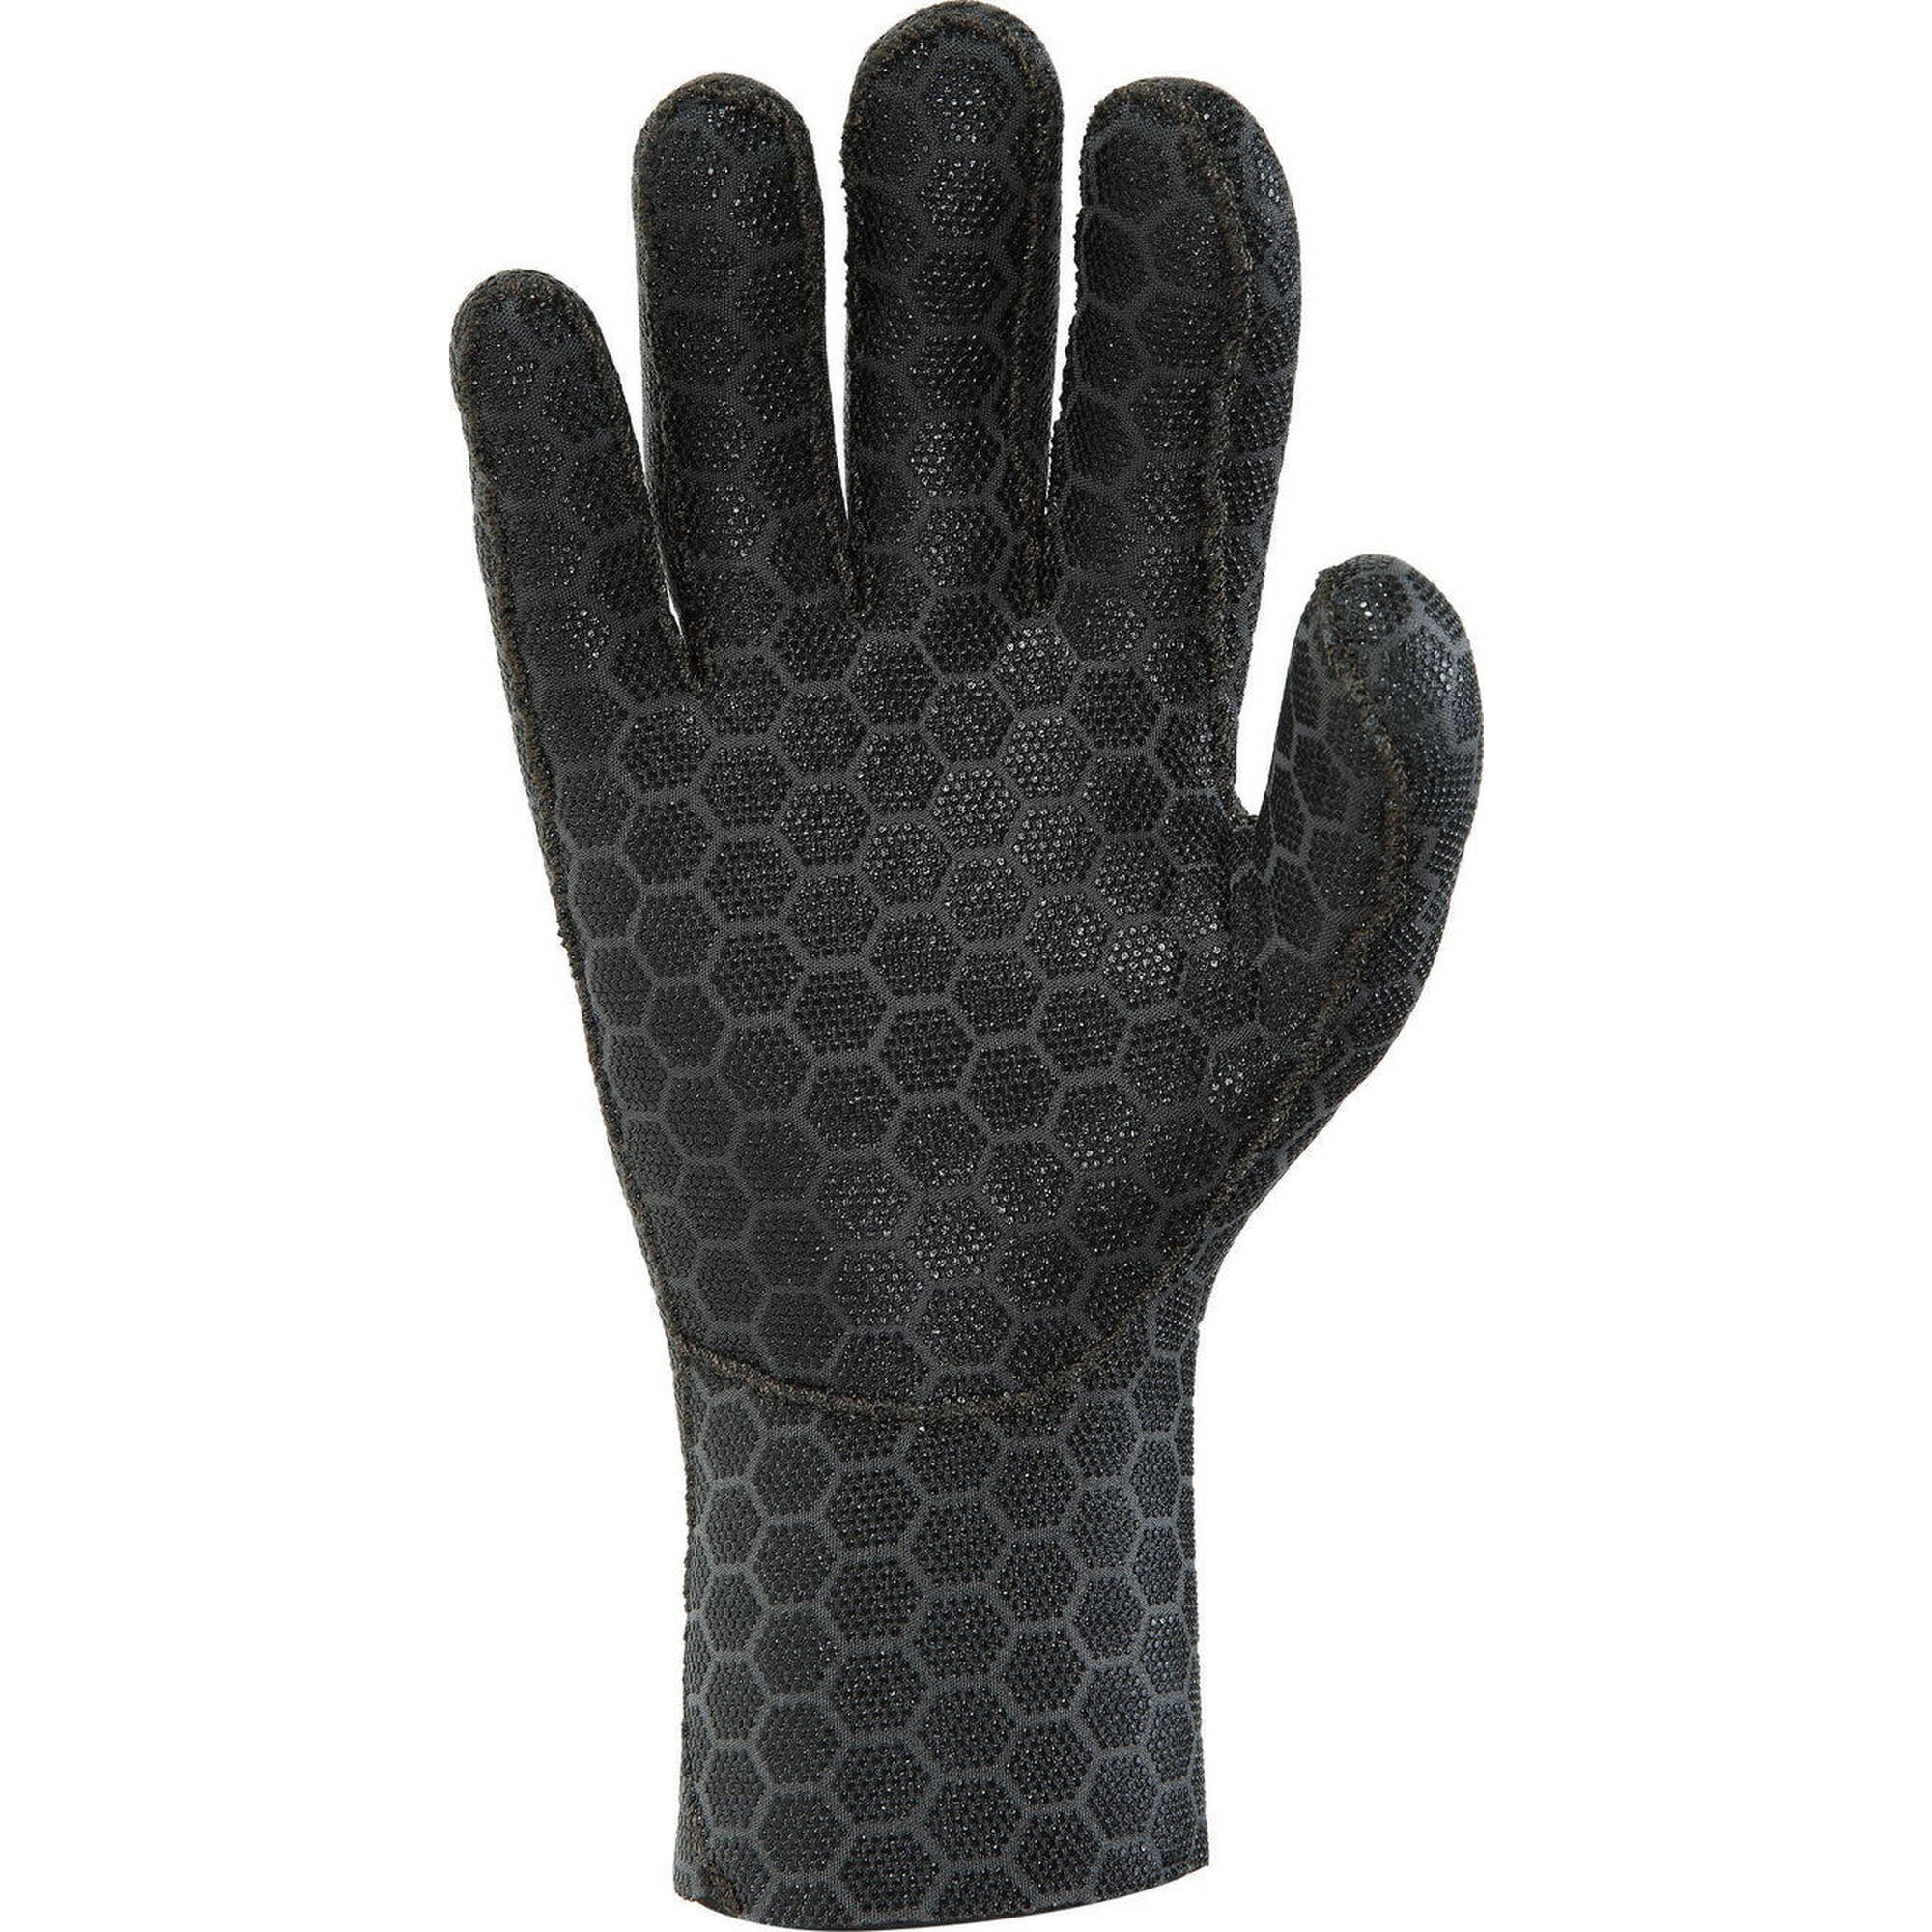 High Stretch Adult Scuba-Diving Gloves - Black S